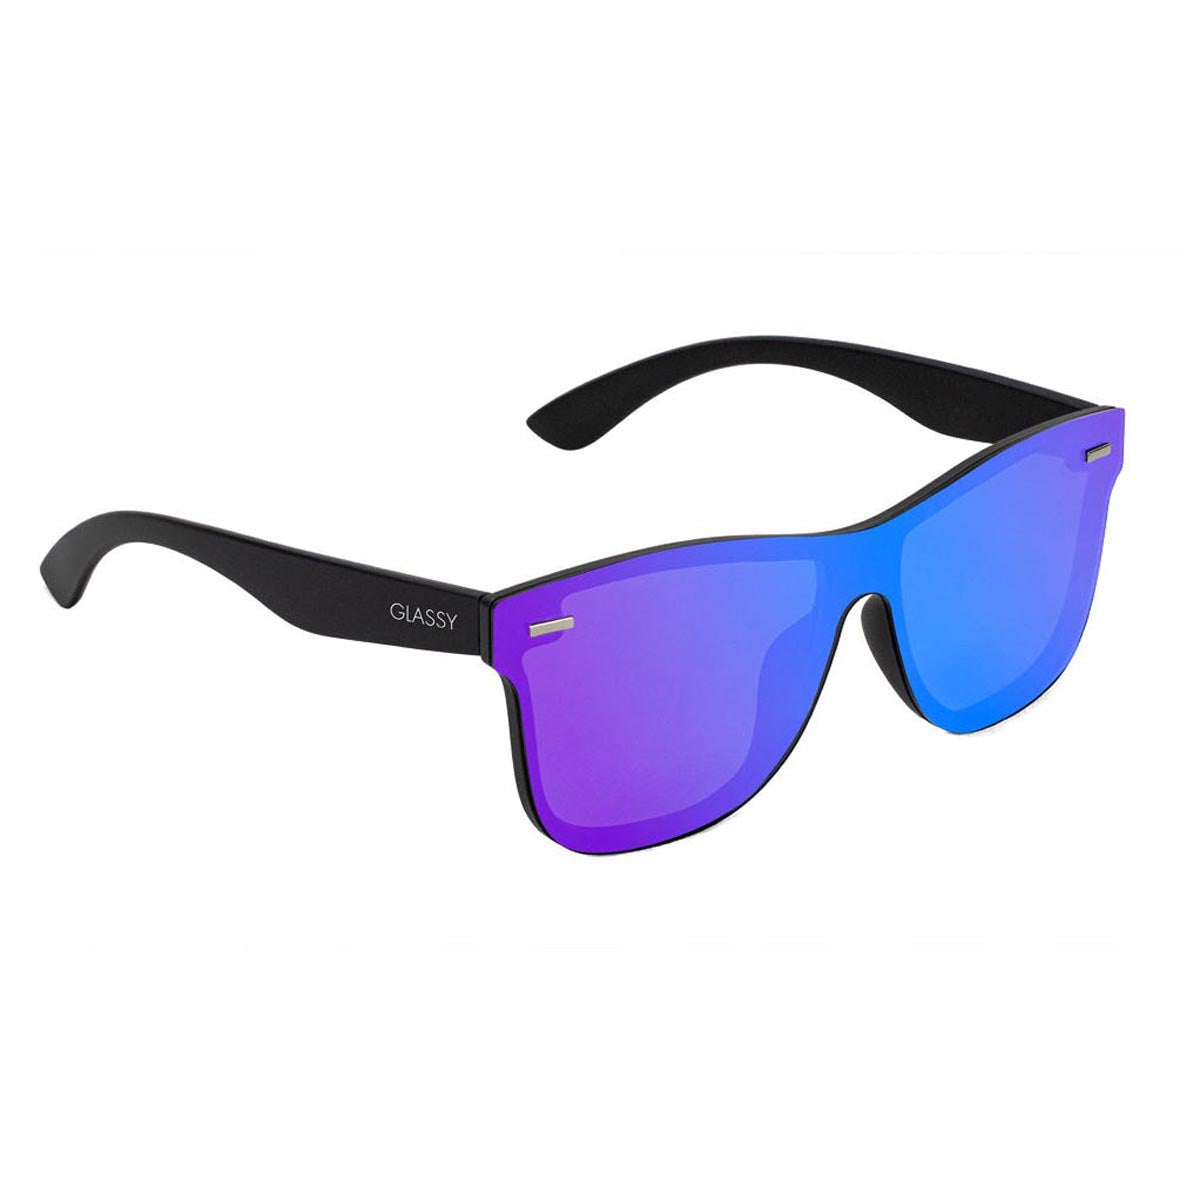 Glassy Leo Premium Polarized Sunglasses - Black/Blue Mirror image 1